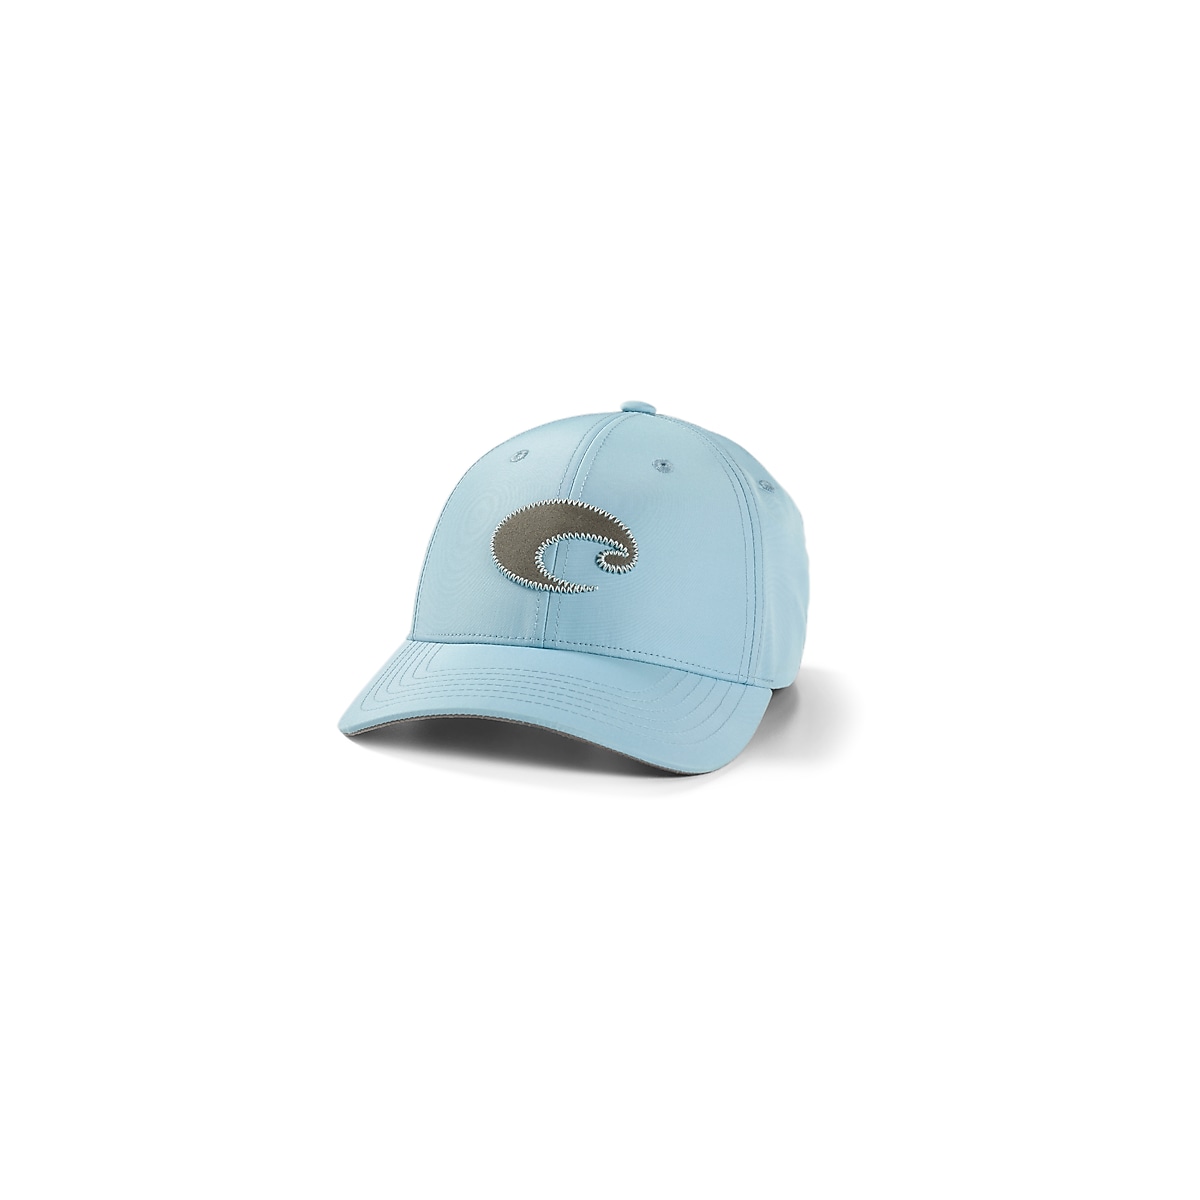 Costa Del Mar soft cotton Blue w/ white poly Mesh Hat Cap Adjustable Back